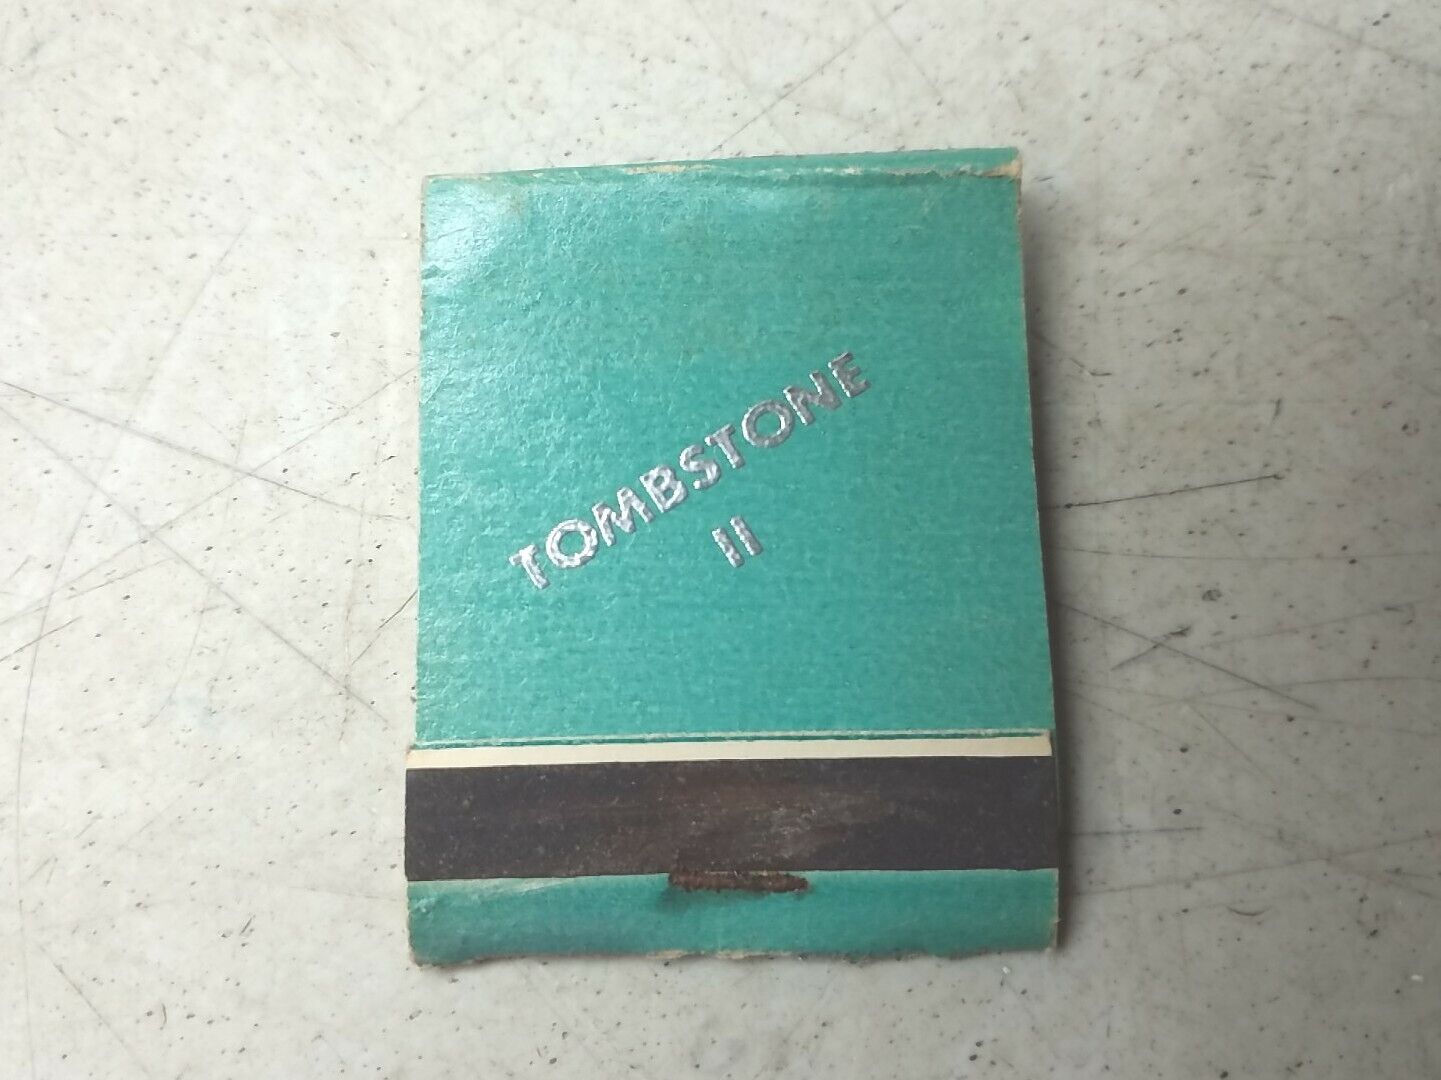 Tombstone II Pizza Restaurant Medford Wisconsin Vintage Advertising Matchbook